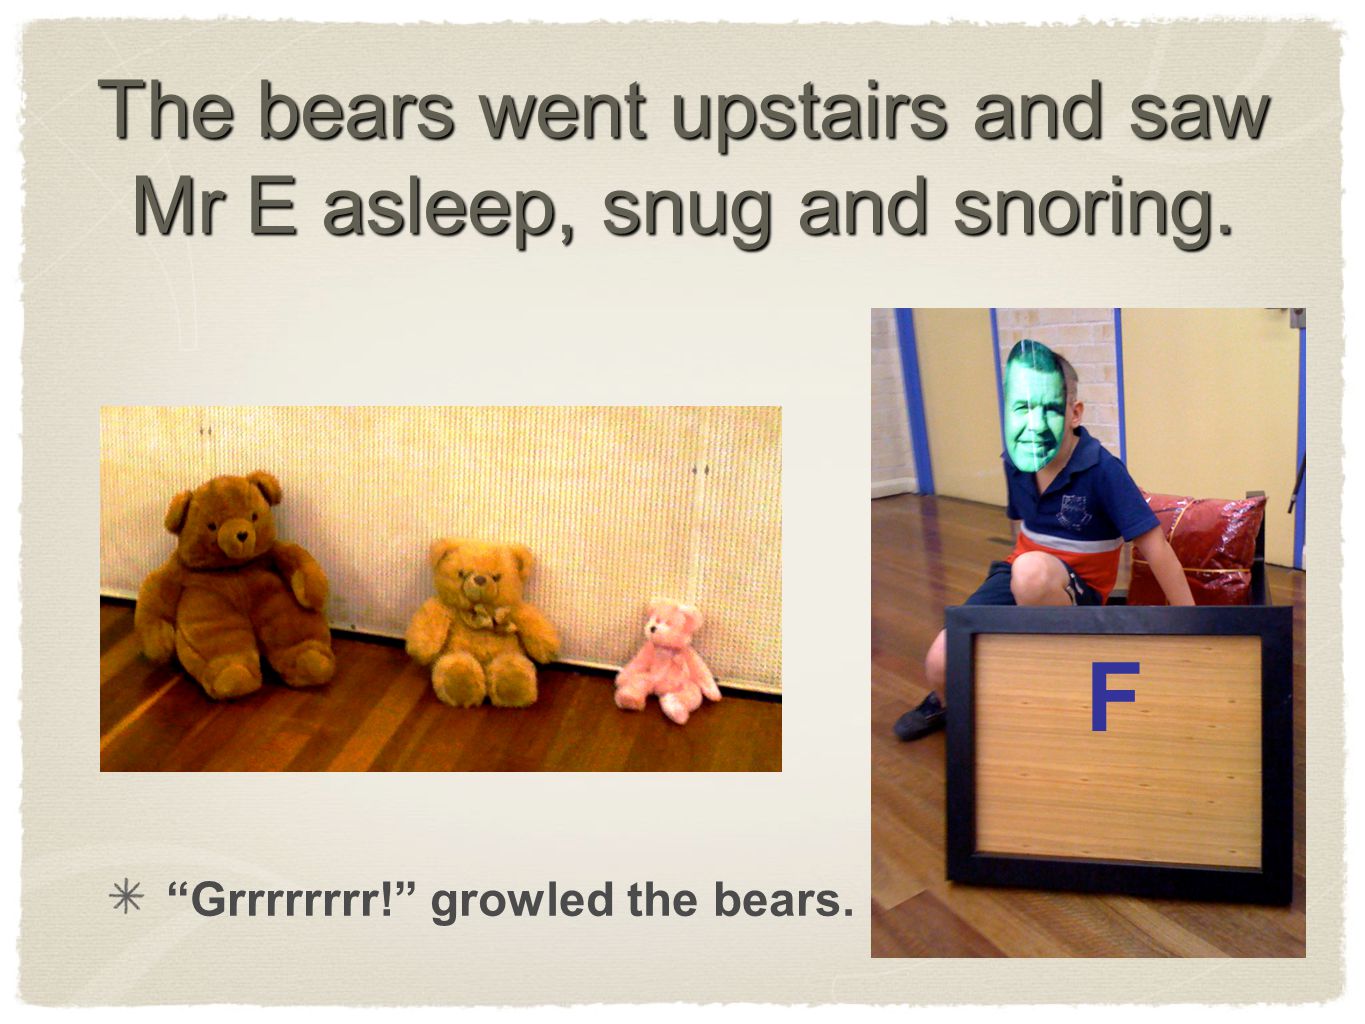 The bears went upstairs and saw Mr E asleep, snug and snoring. Grrrrrrrr! growled the bears. F